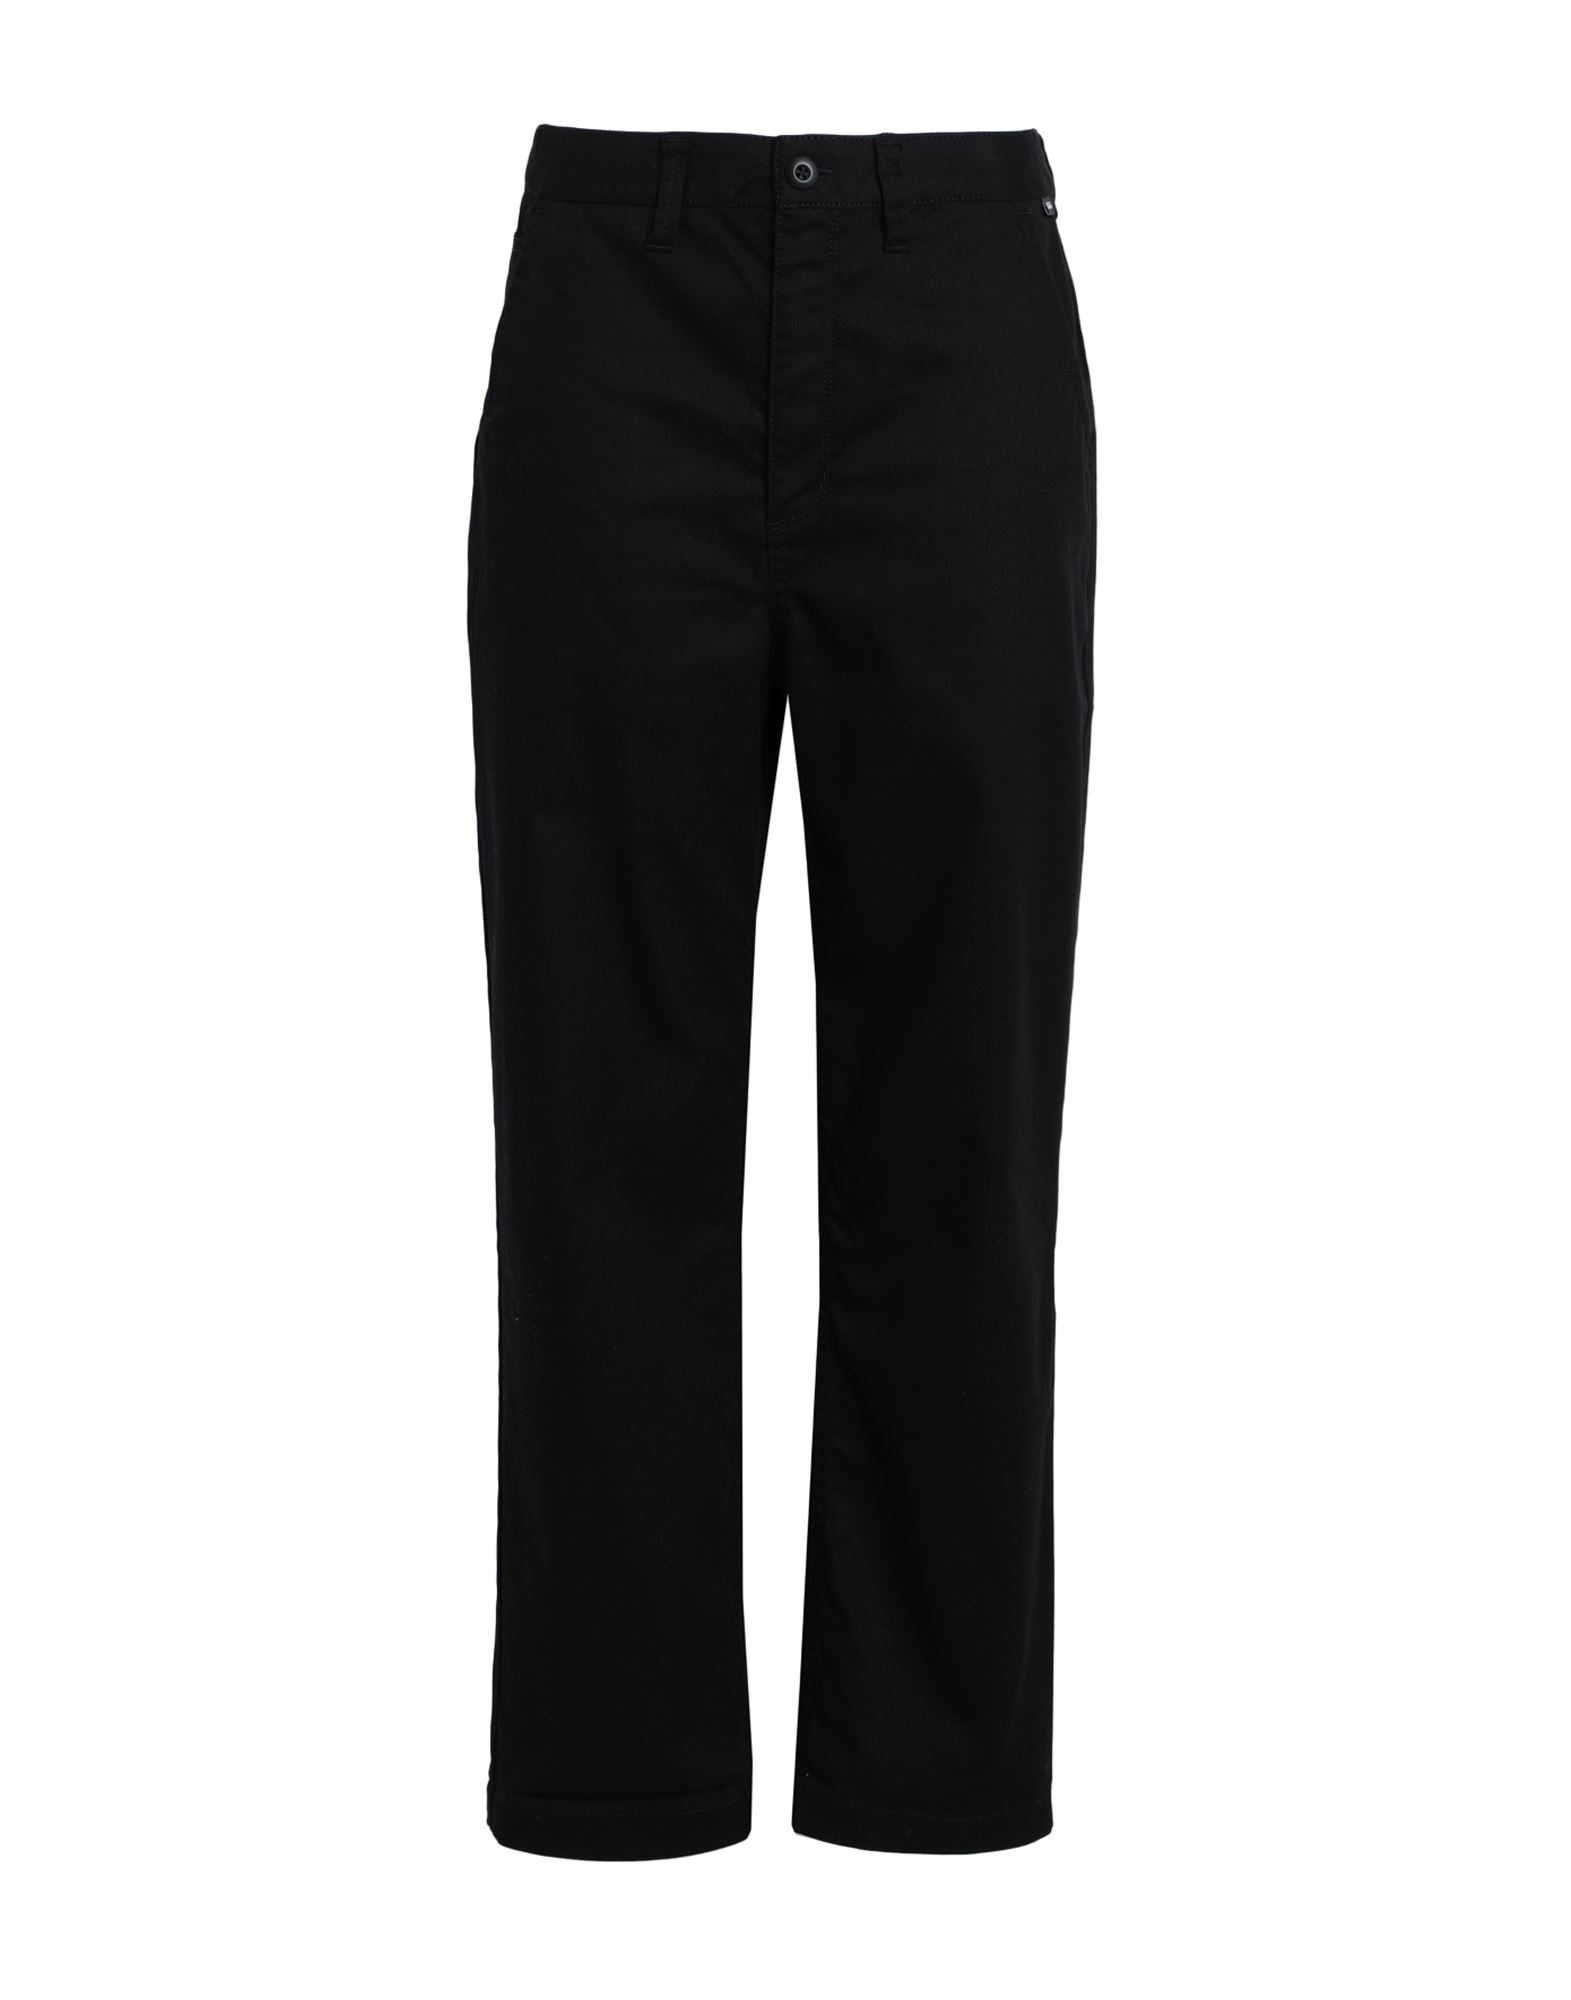 Vans Wm Authentic Wmn Chino Woman Pants Black Size 26 Cotton, Polyester, Elastane